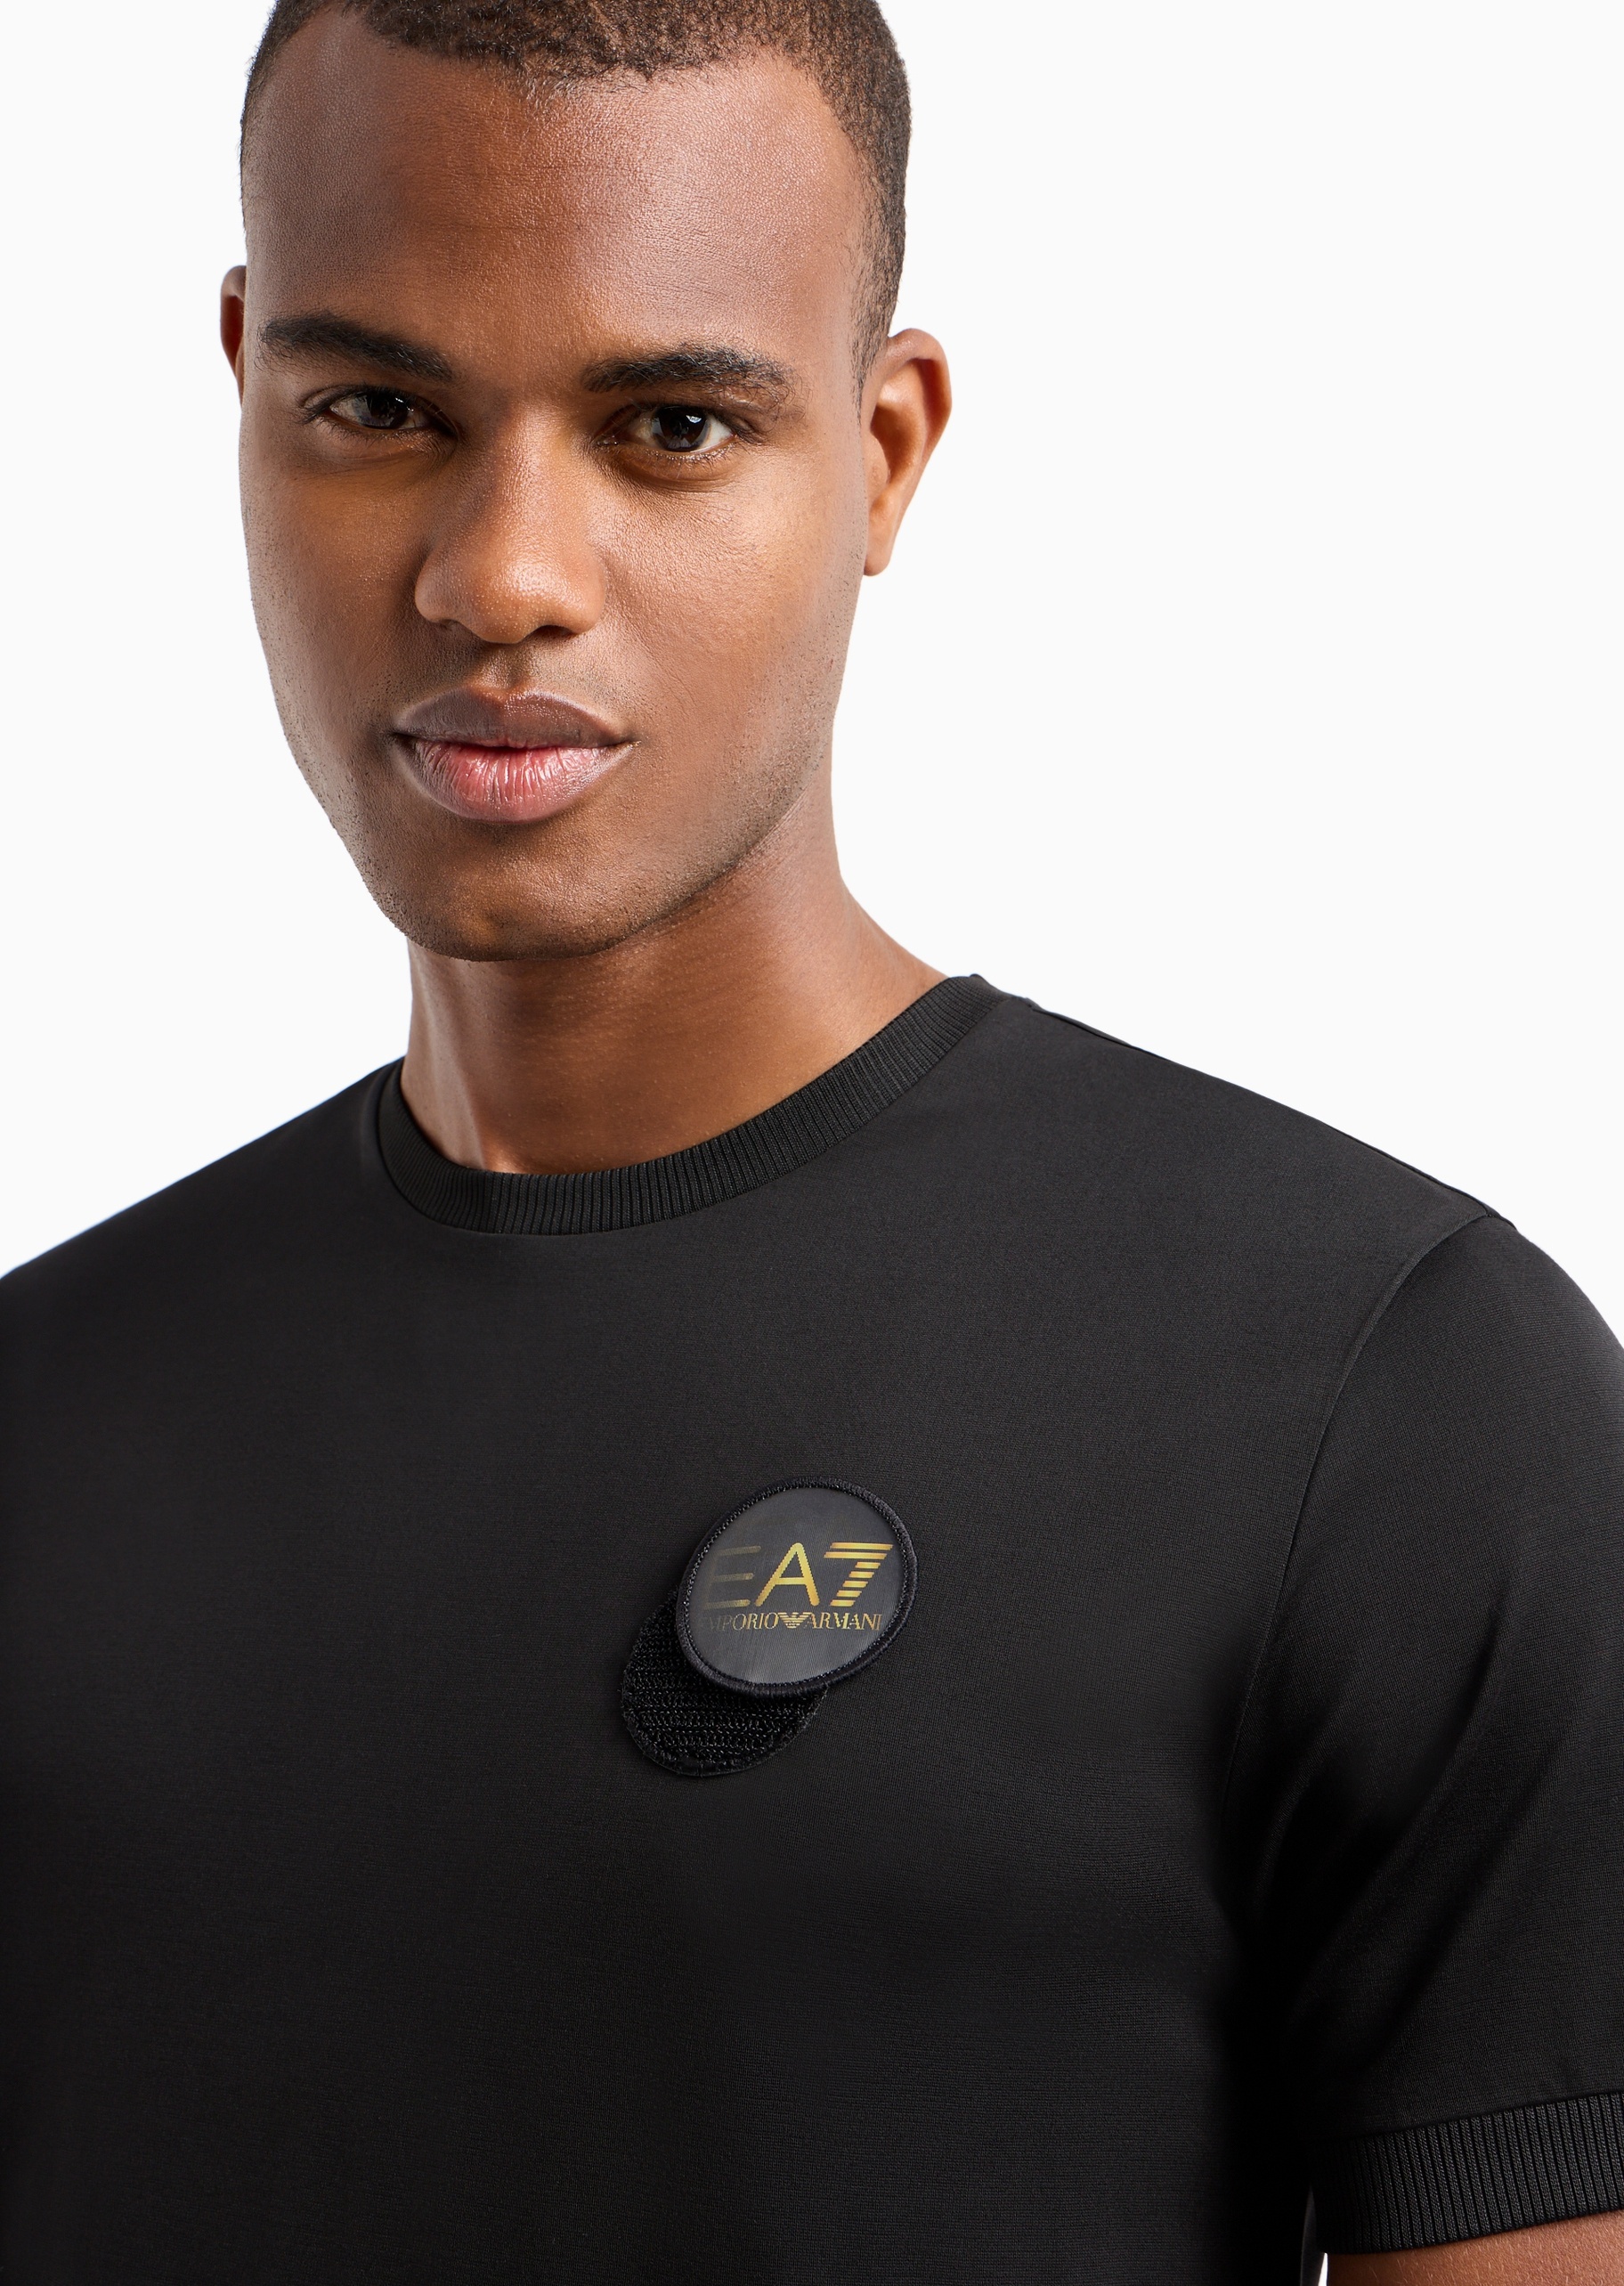 EA7 男士弹力合身短袖圆领运动健身训练T恤